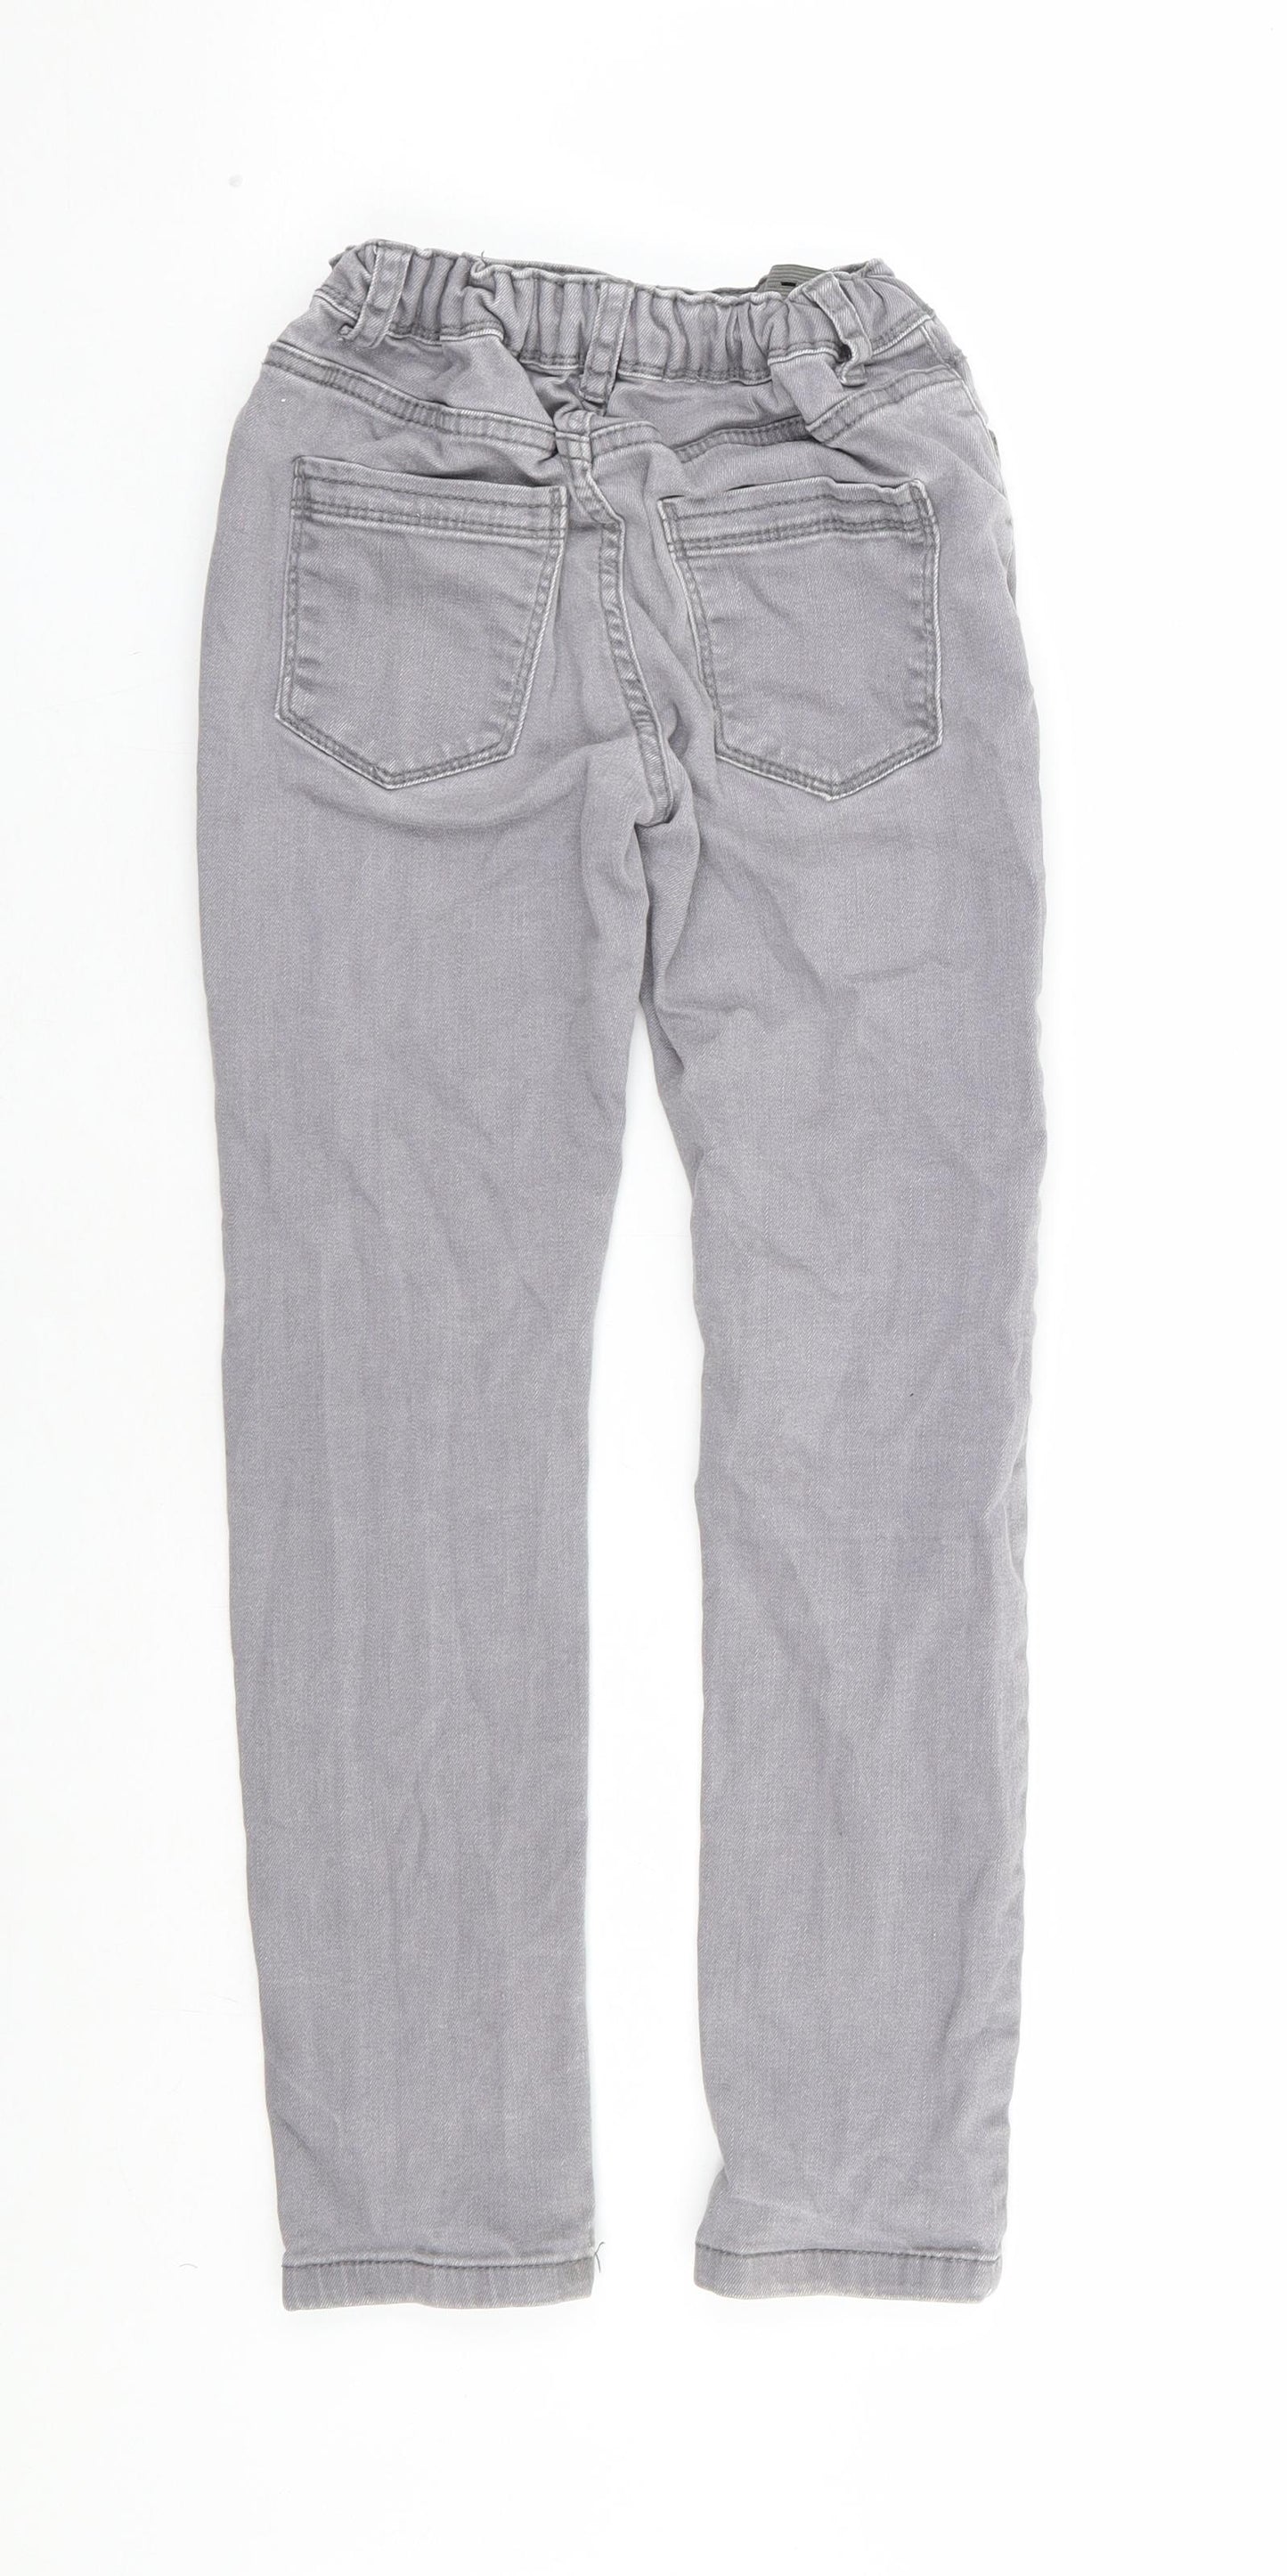 Primark Boys Grey Cotton Skinny Jeans Size 9-10 Years Regular Zip